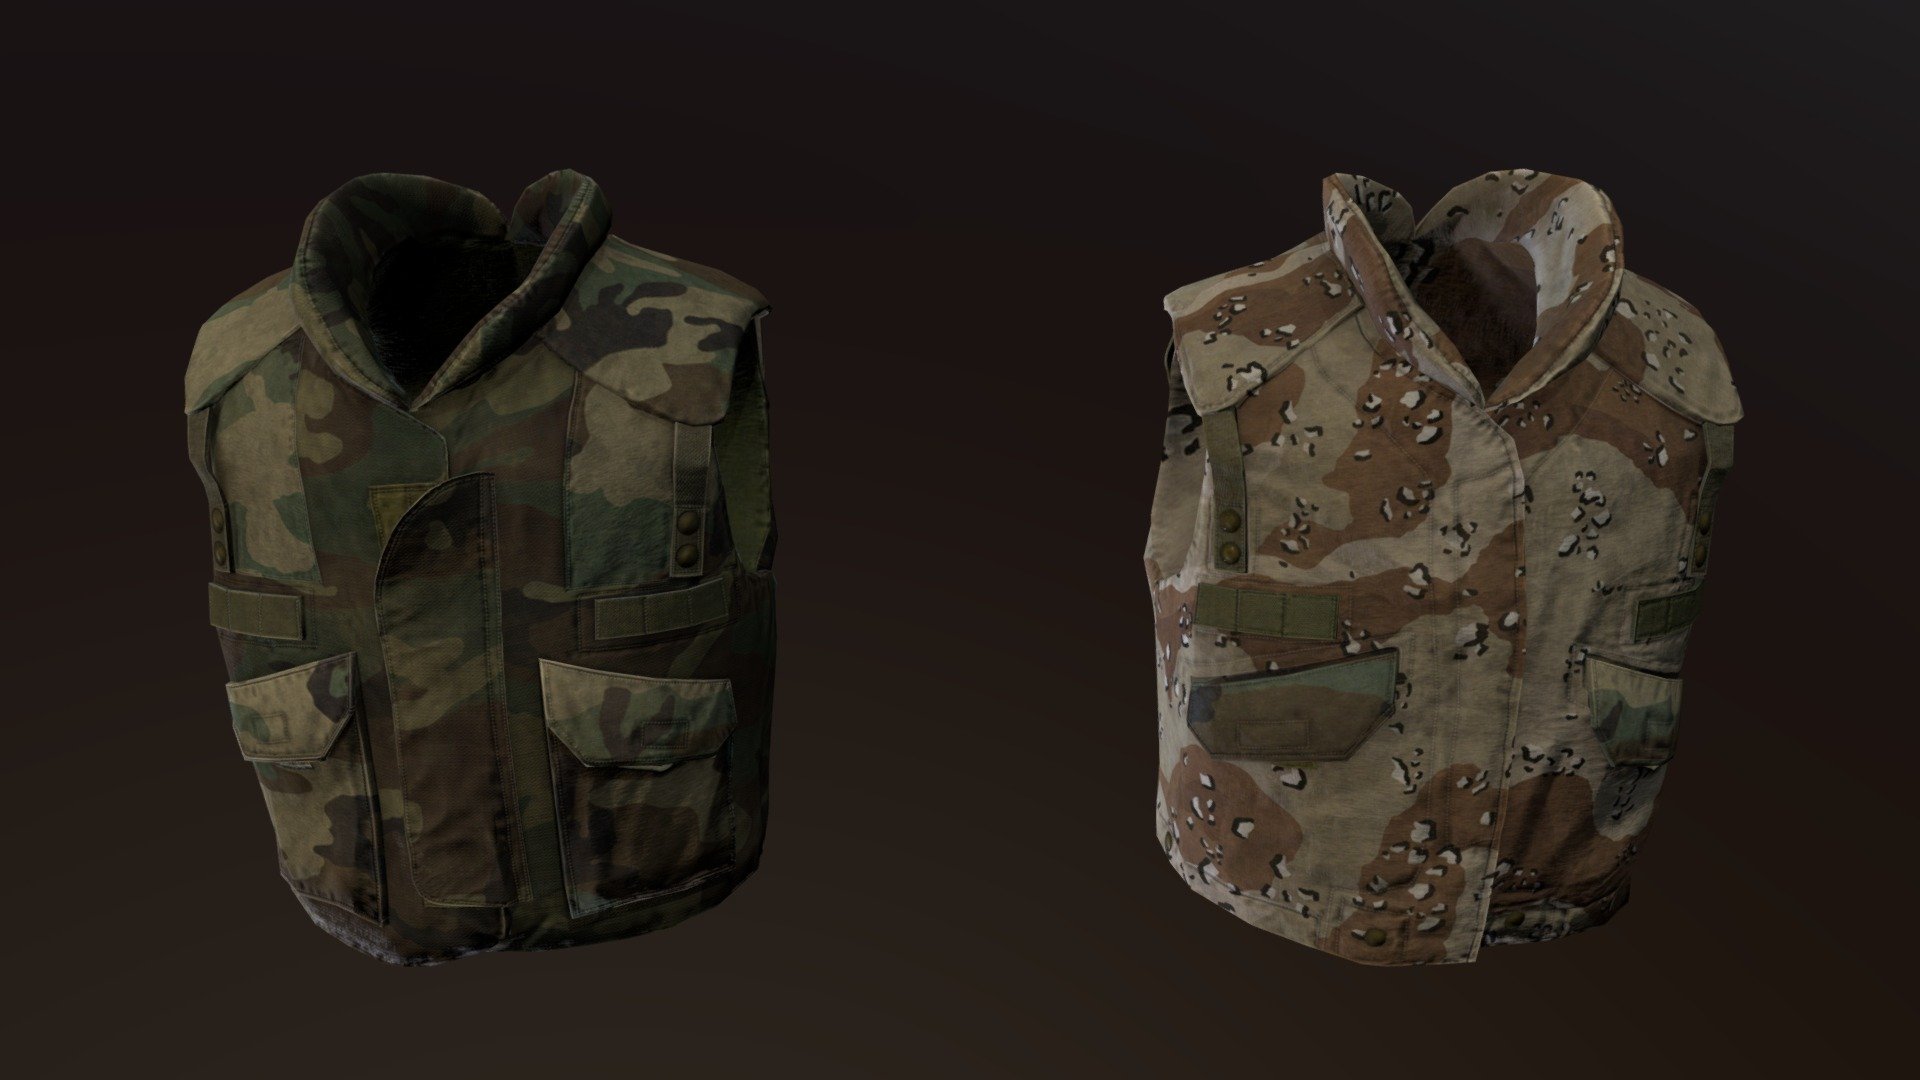 Body armour/ &ldquo;flak vest/jacket